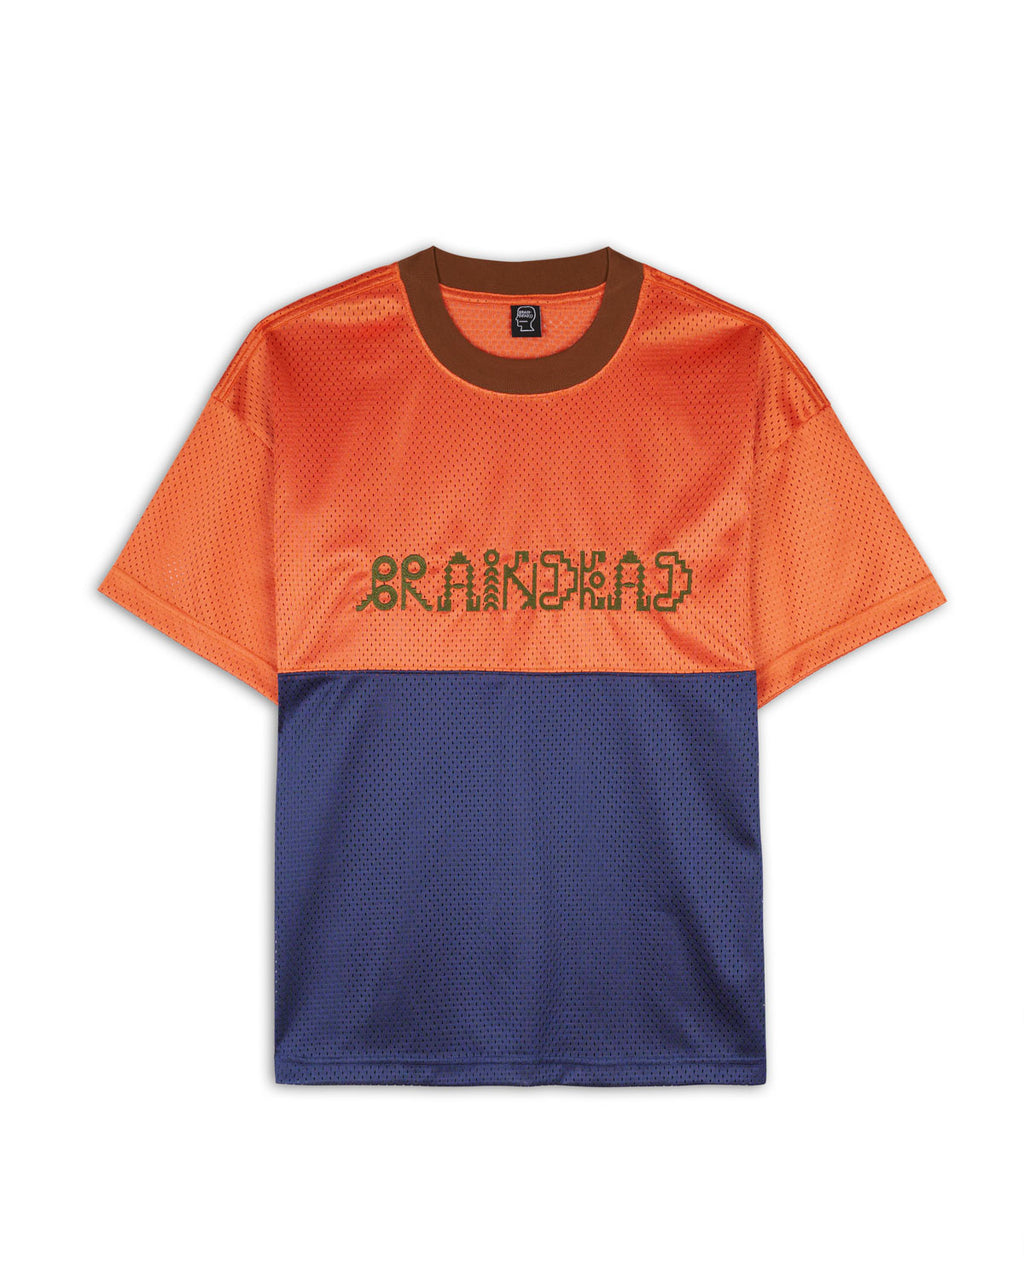 Maze Football Mesh Shirt - Orange/Navy